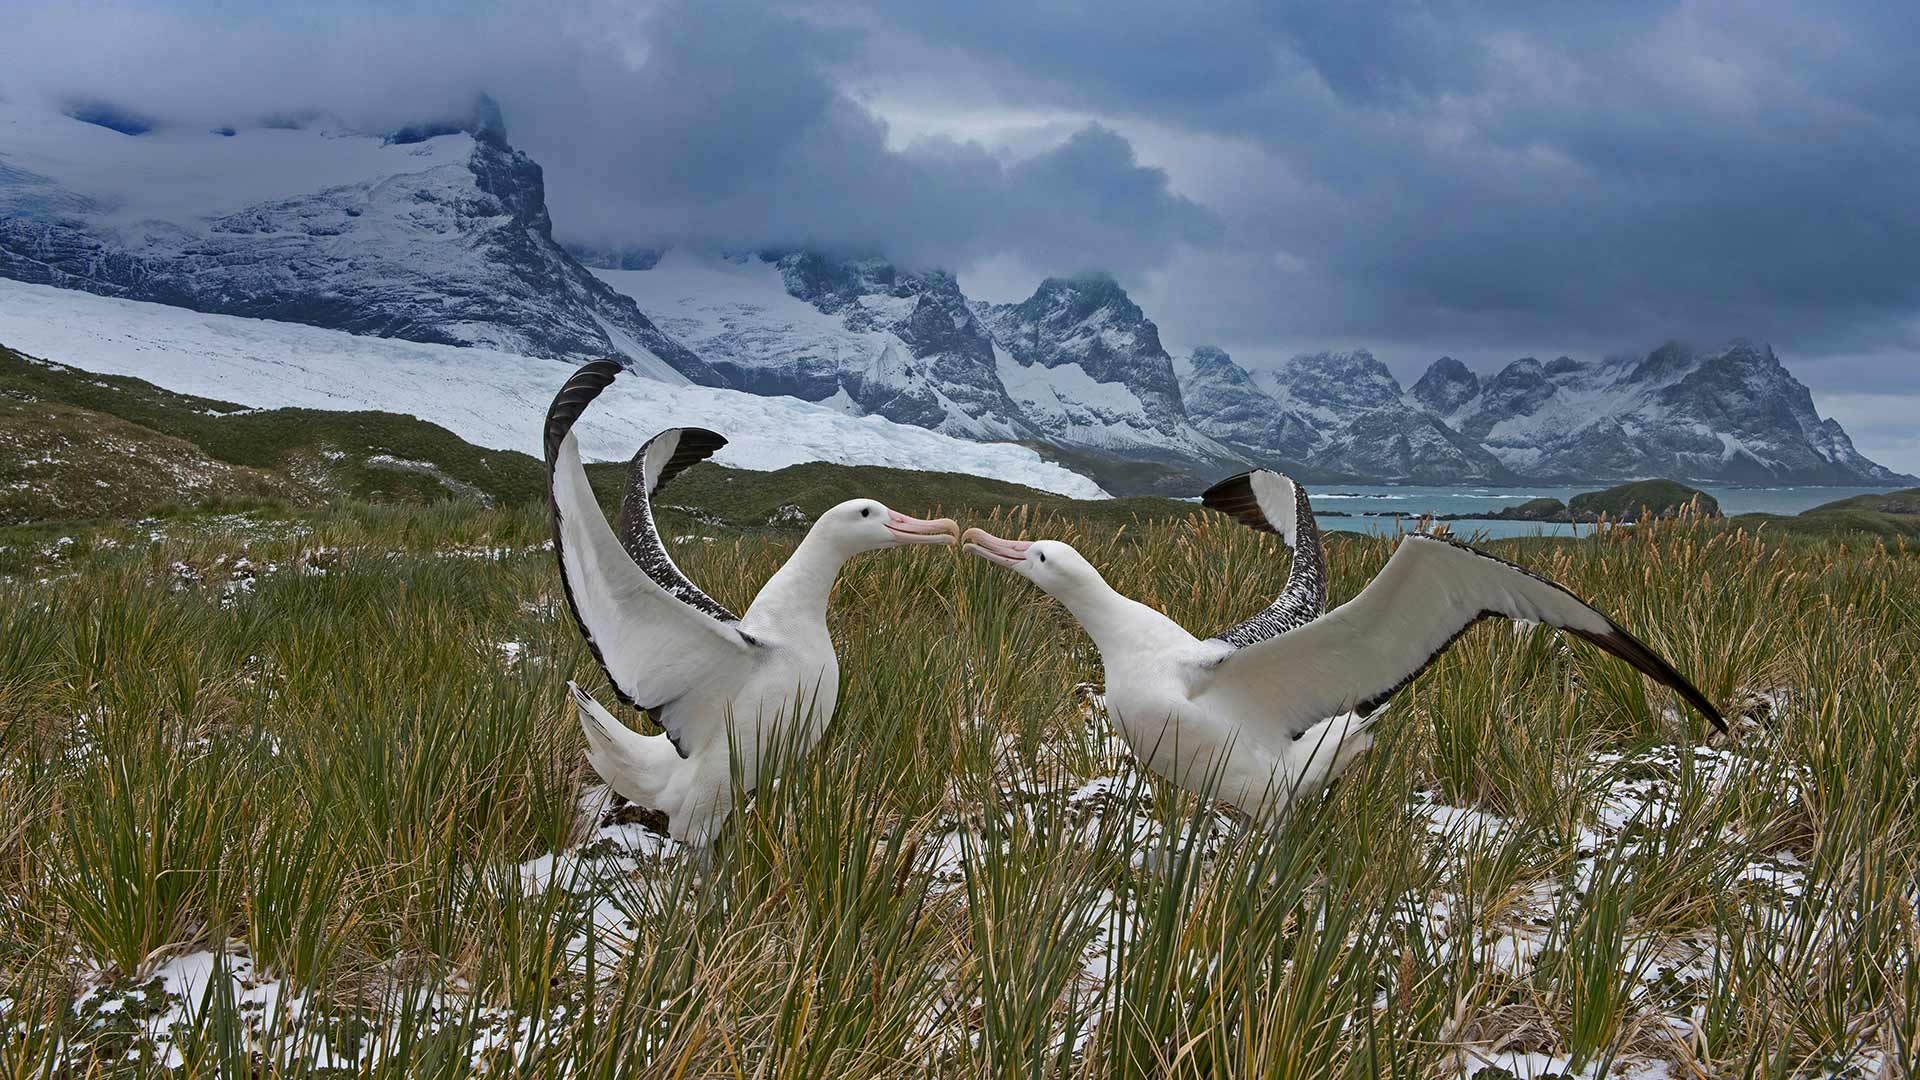 Flocking albatrosses, Antarctic spectacle, Majestic marine birds, Wallpaper beauty, 1920x1080 Full HD Desktop